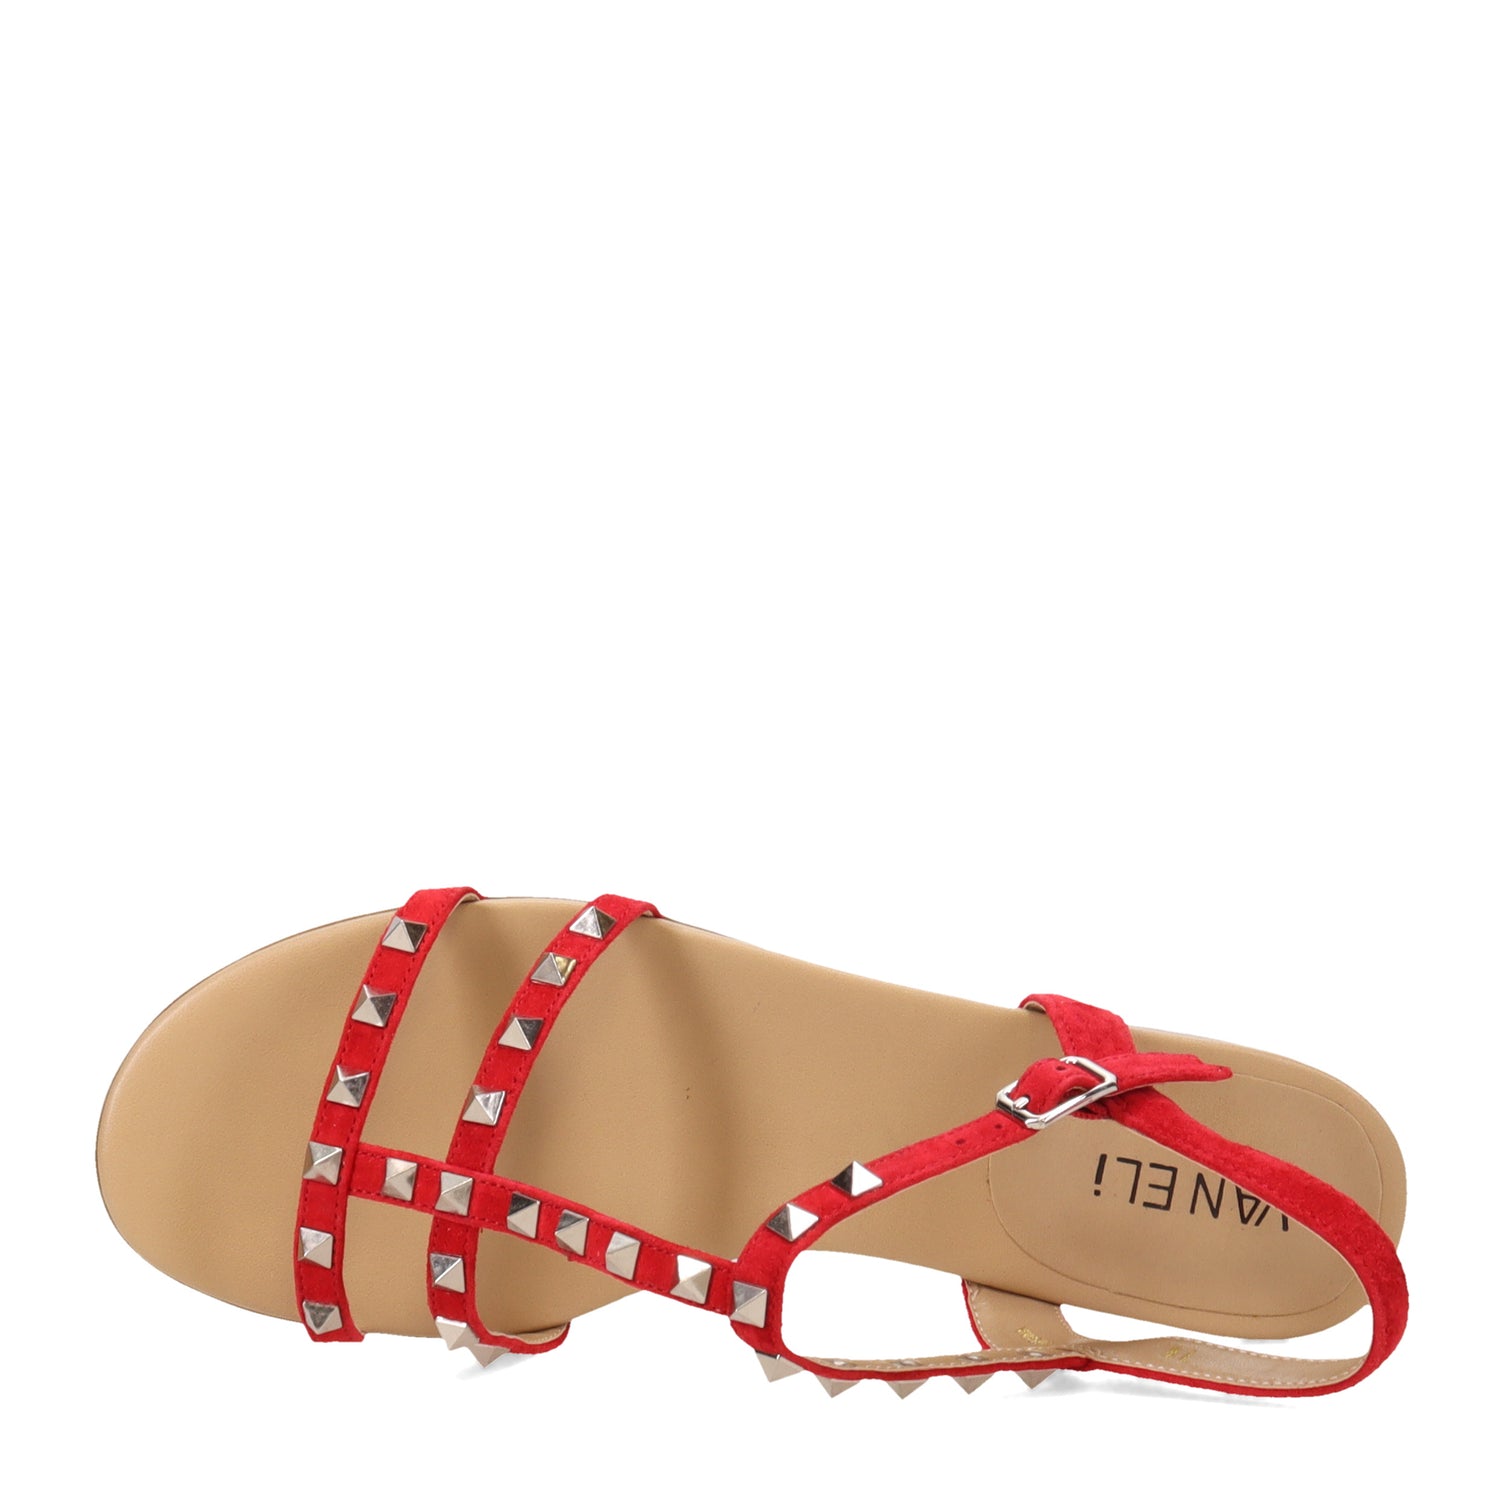 Peltz Shoes  Women's Vaneli Brunel Sandal RED SUEDE BRUNEL-REDSDE